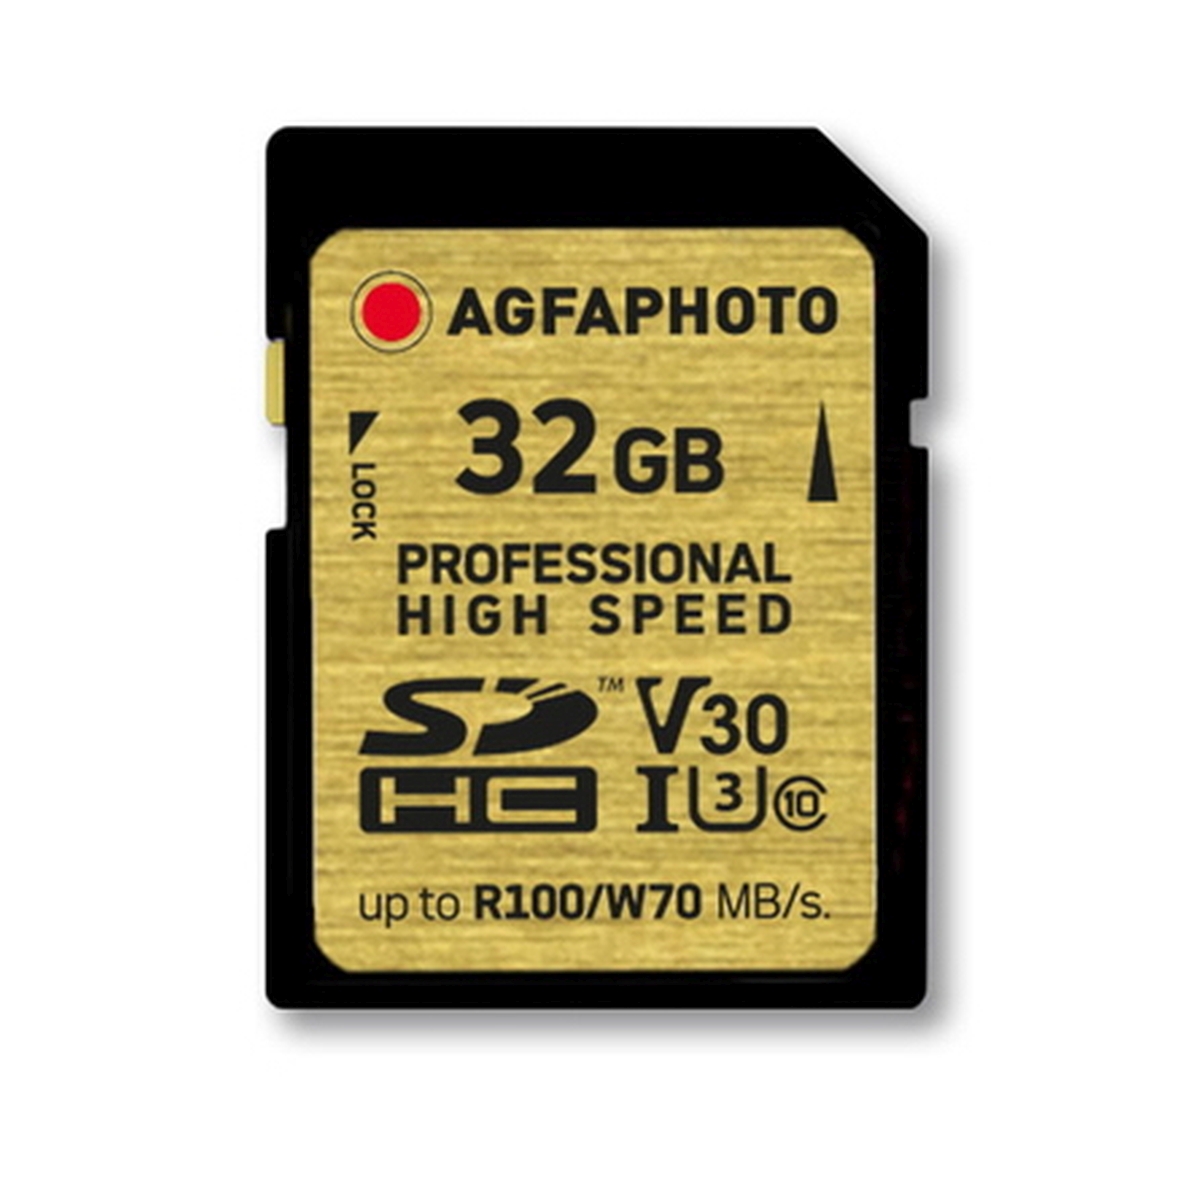 AgfaPhoto 32 GB SDHC-Karte UHS-I 100/70 MB/s